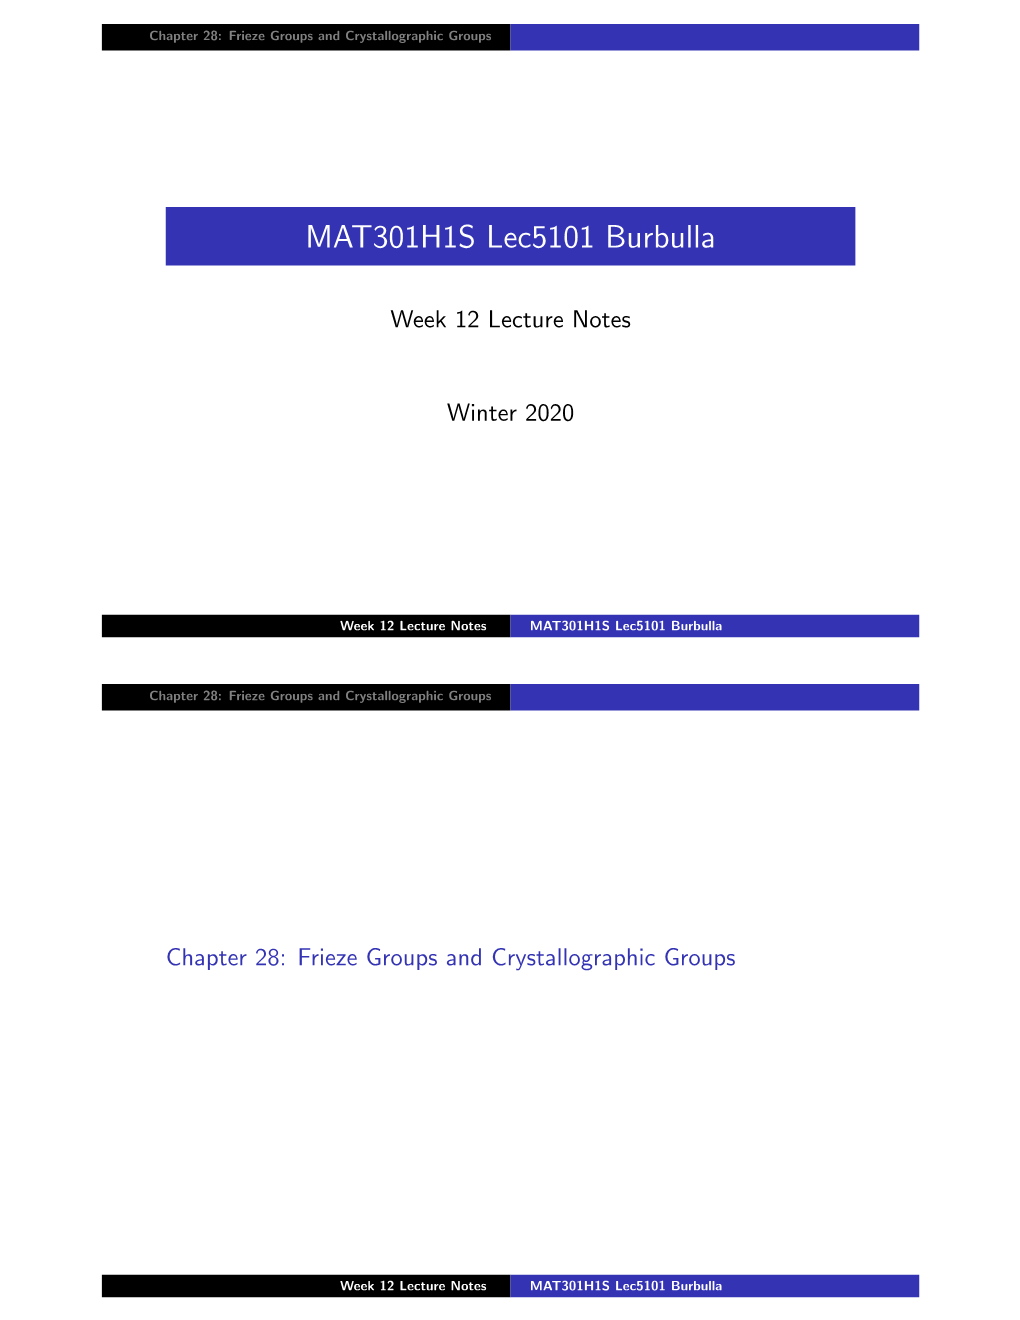 MAT301H1S Lec5101 Burbulla